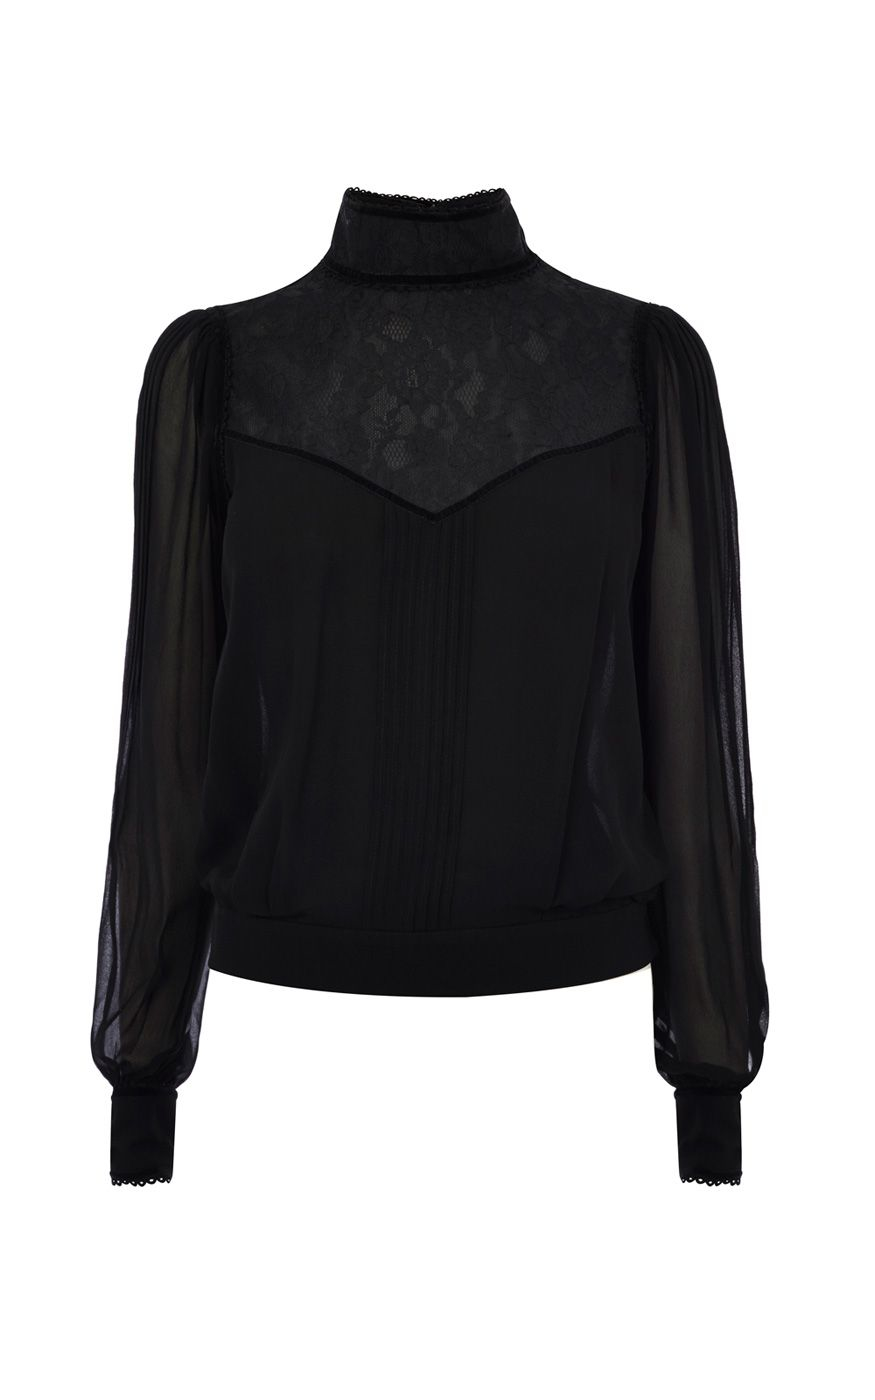 Lyst - Karen Millen Victorian Blouse in Black